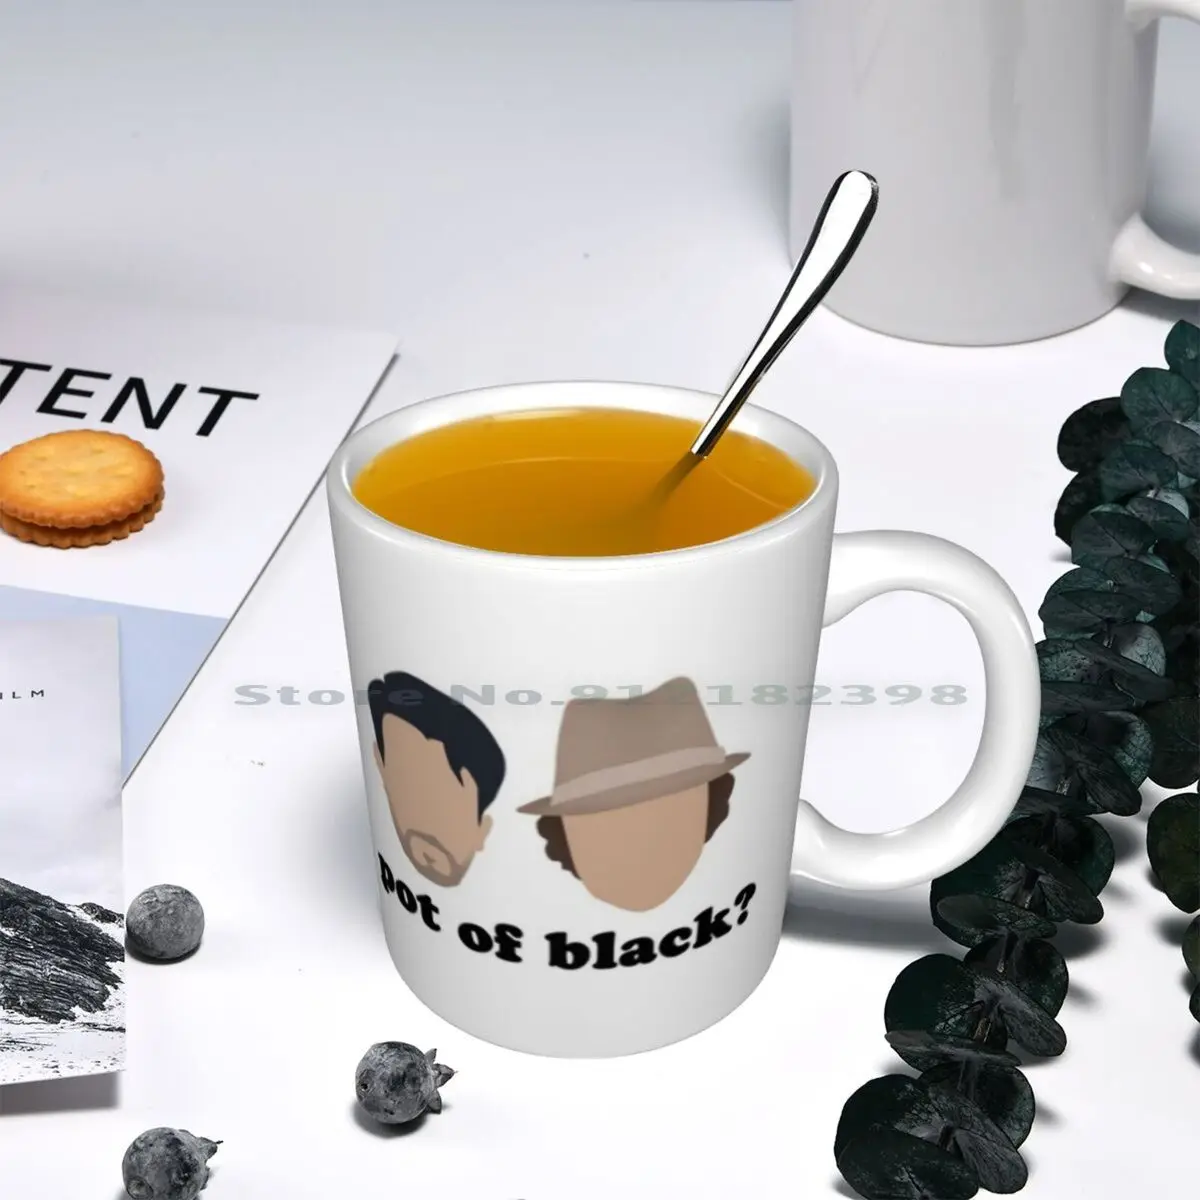 Pot Of Black ? Nirvanna The Band Ceramic Mugs Coffee Cups Milk Tea Mug Nirvanna Pot Black Coffee Band Show Matt Johnson Jay images - 6